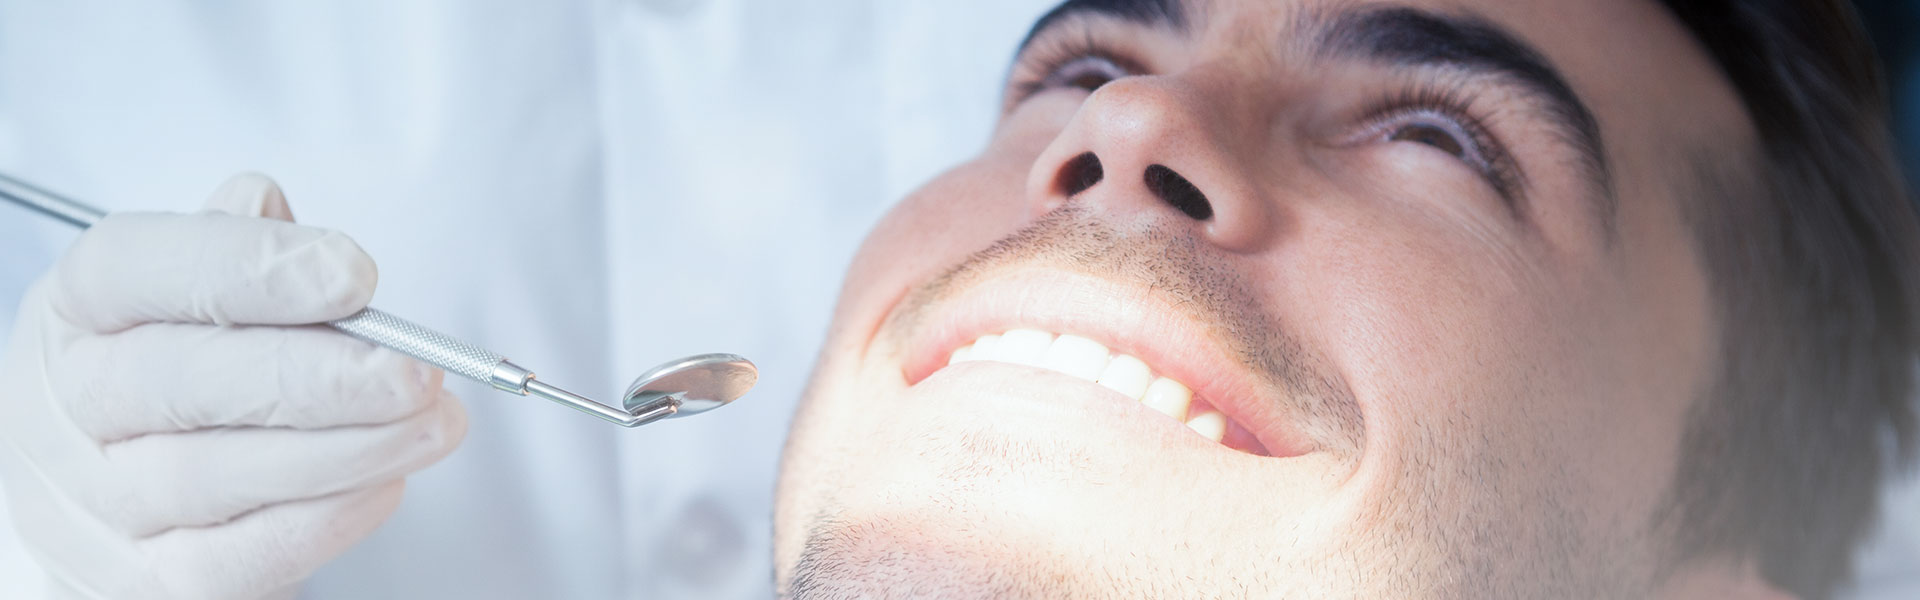 A man is smiling at dental